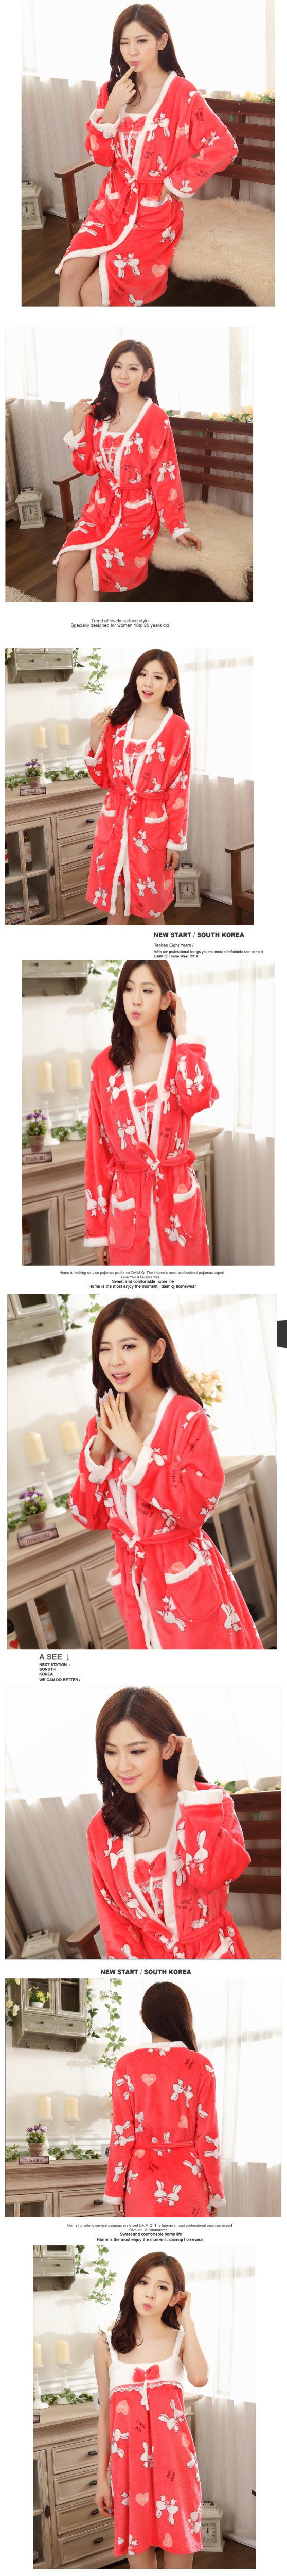 New Coming Winter Sexy Long- Sleeved Pajamas Sleepwear Women Fashion Sleepwear_7